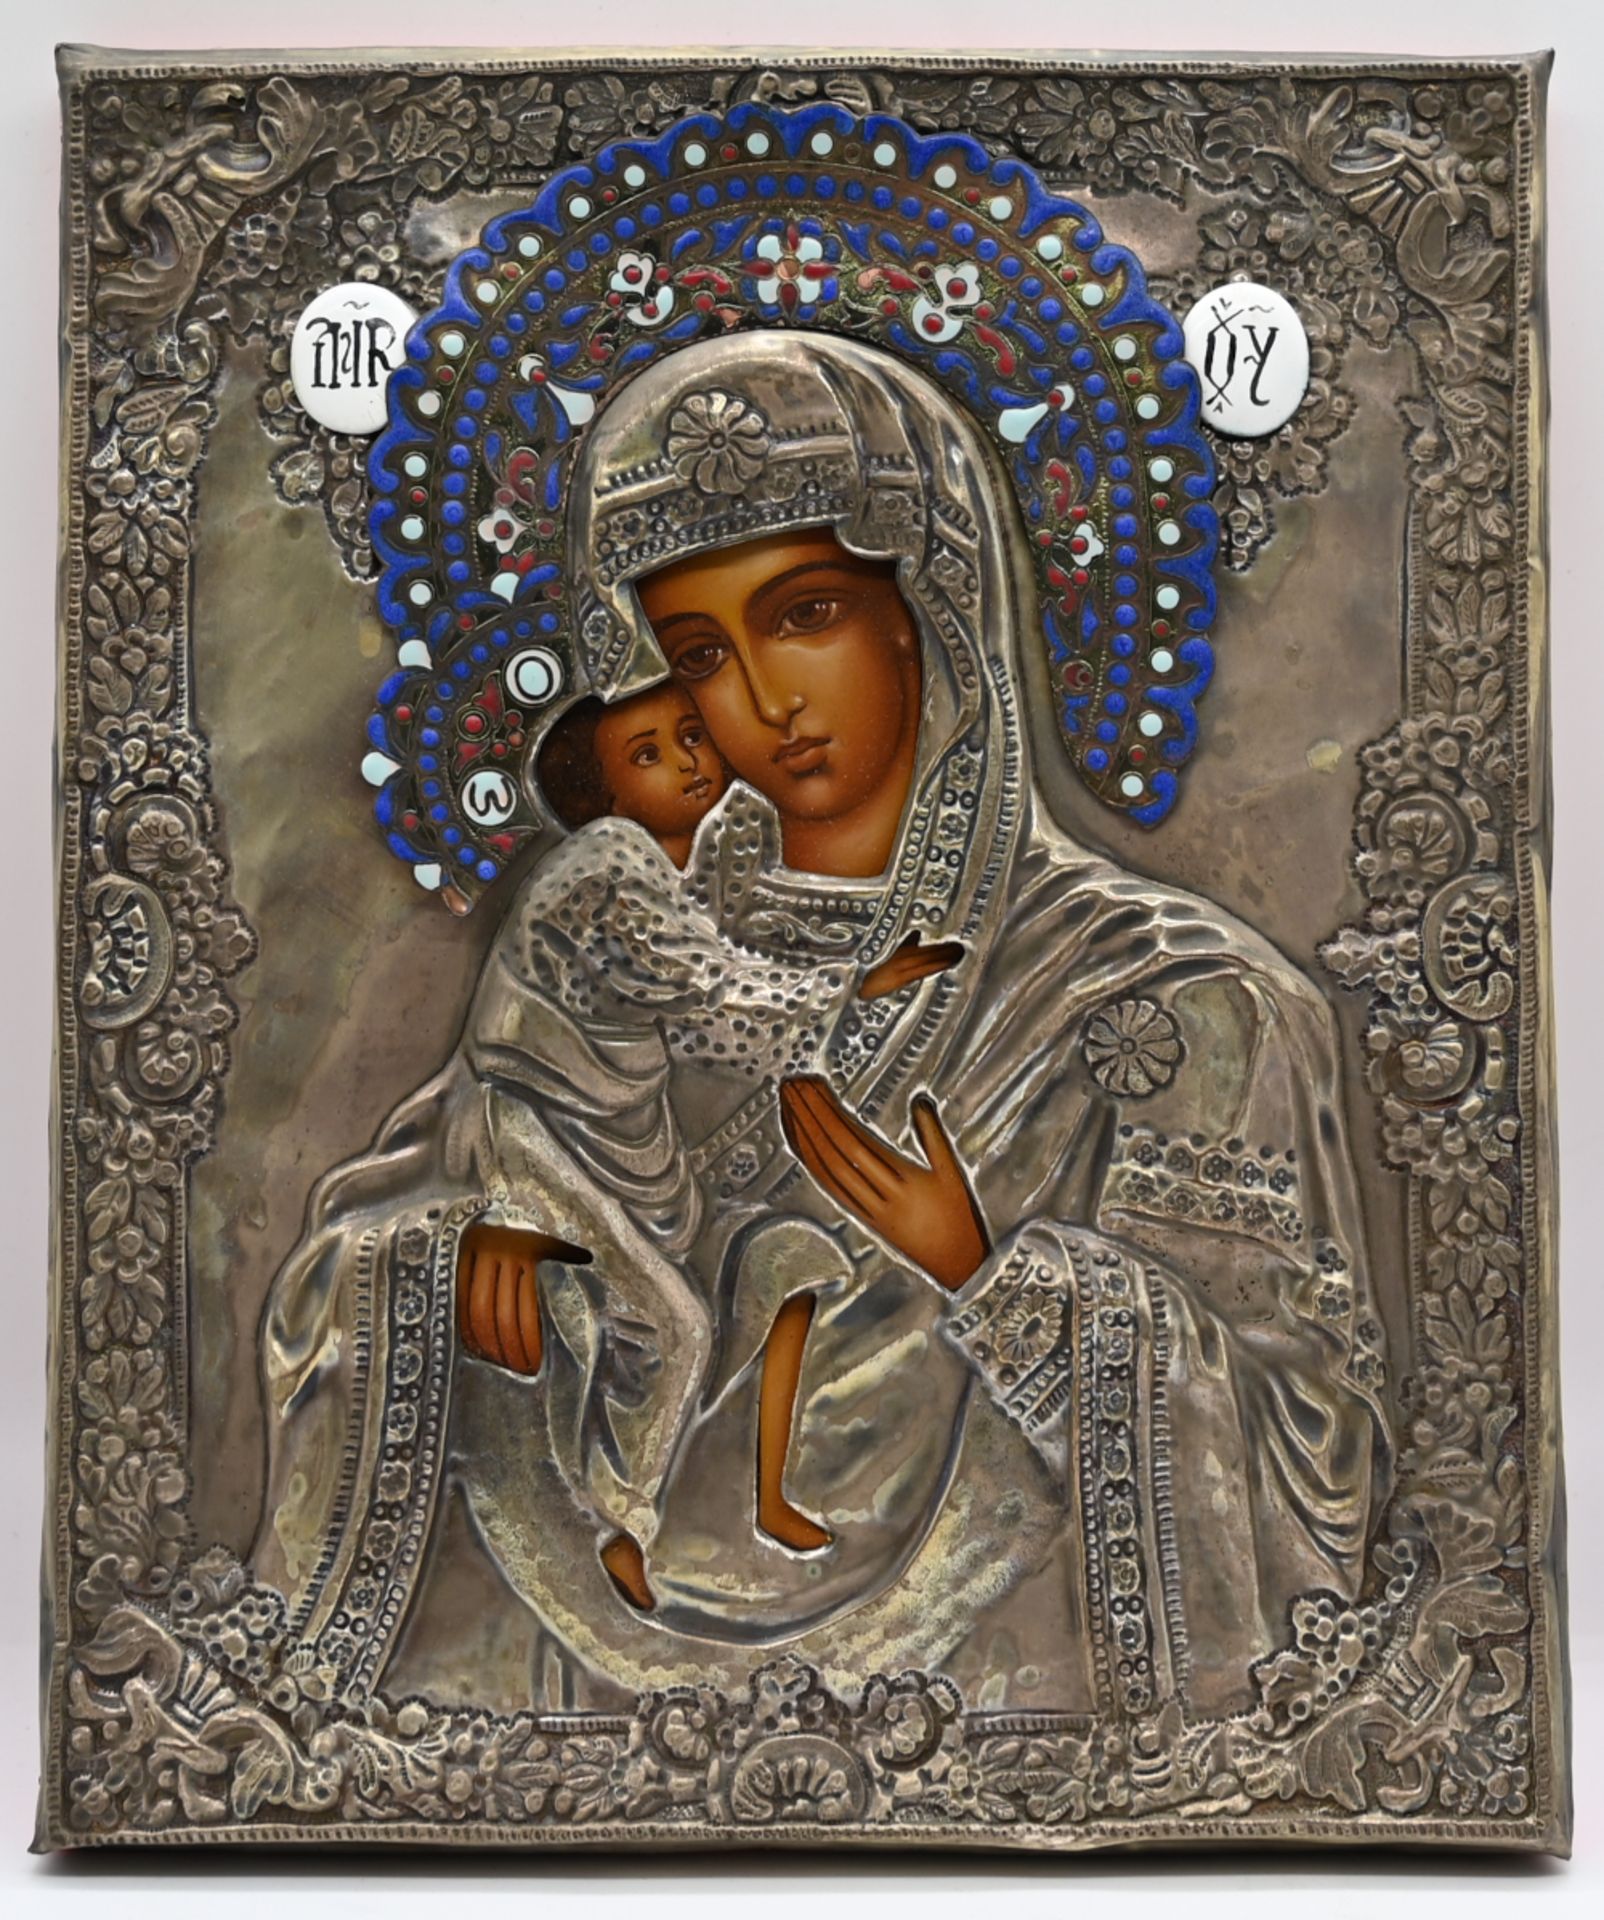 1 Ikone wohl Russland Metalloklad wohl Messing/ versilbert, "Mutter Gottes", ca. 31x26cm, Asp.